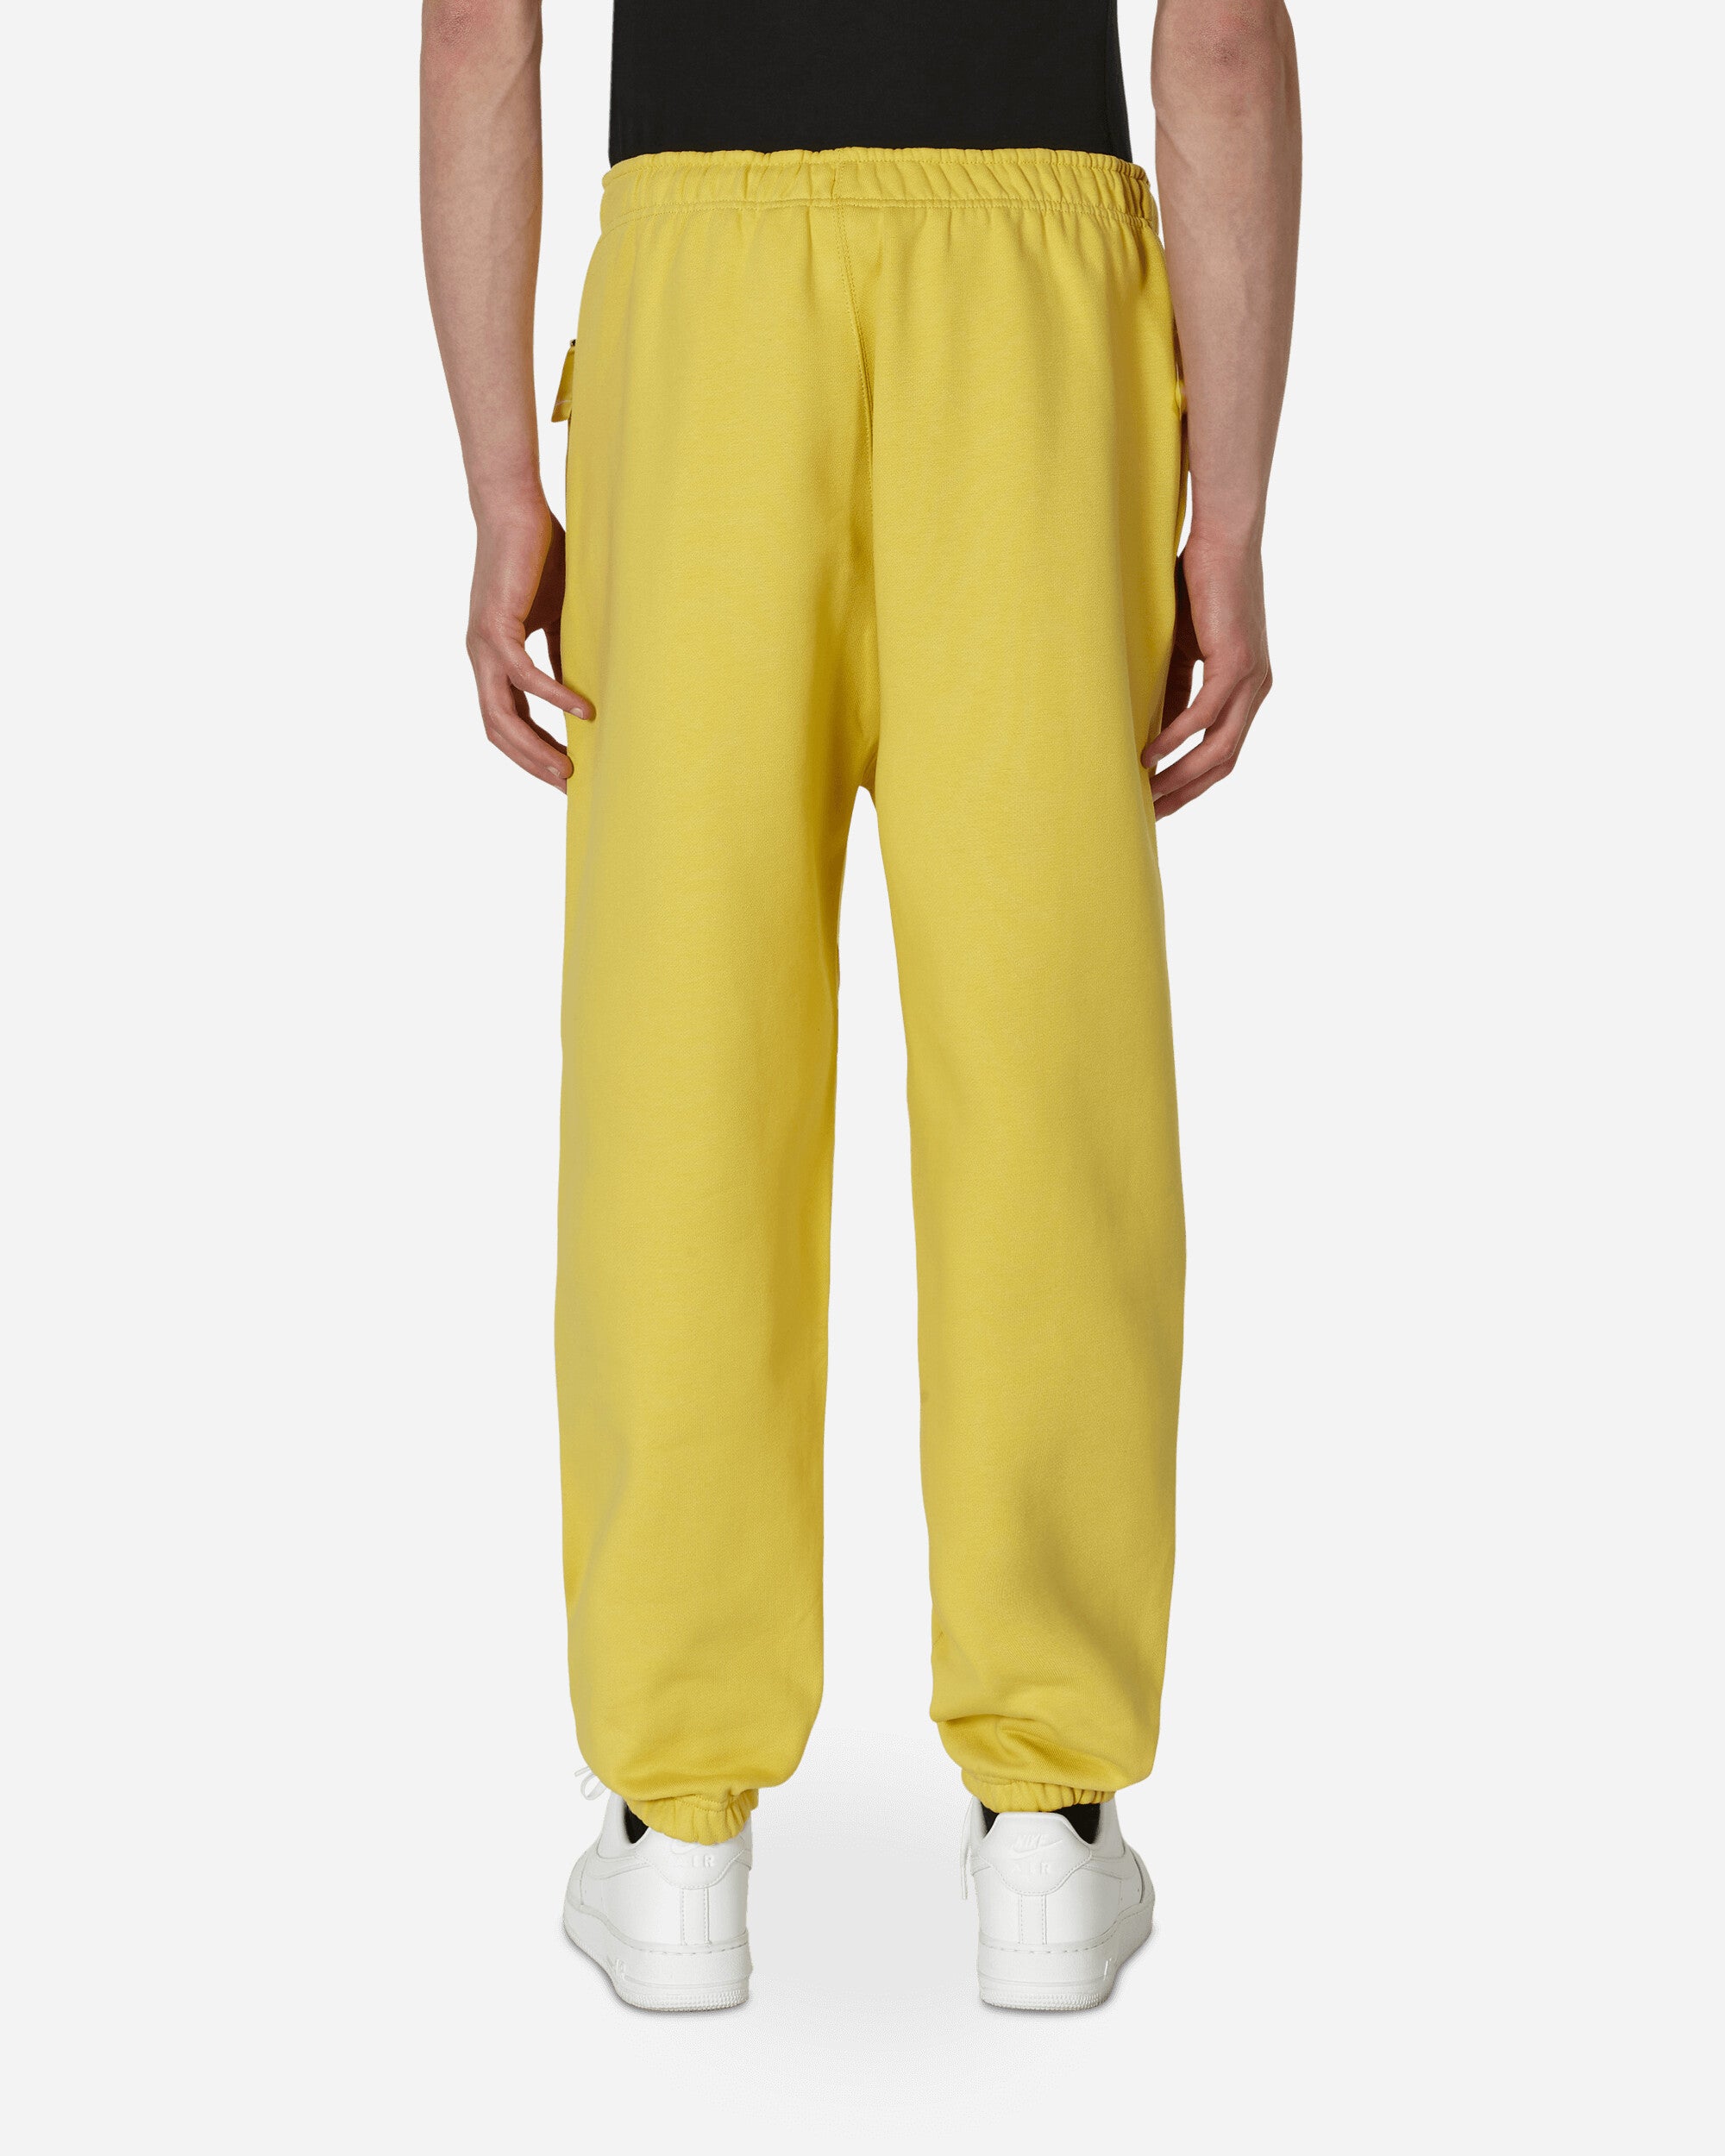 Nike Solo Swsh Flc Cf Pant Saturn Gold/White Pants Sweatpants DX1364-700